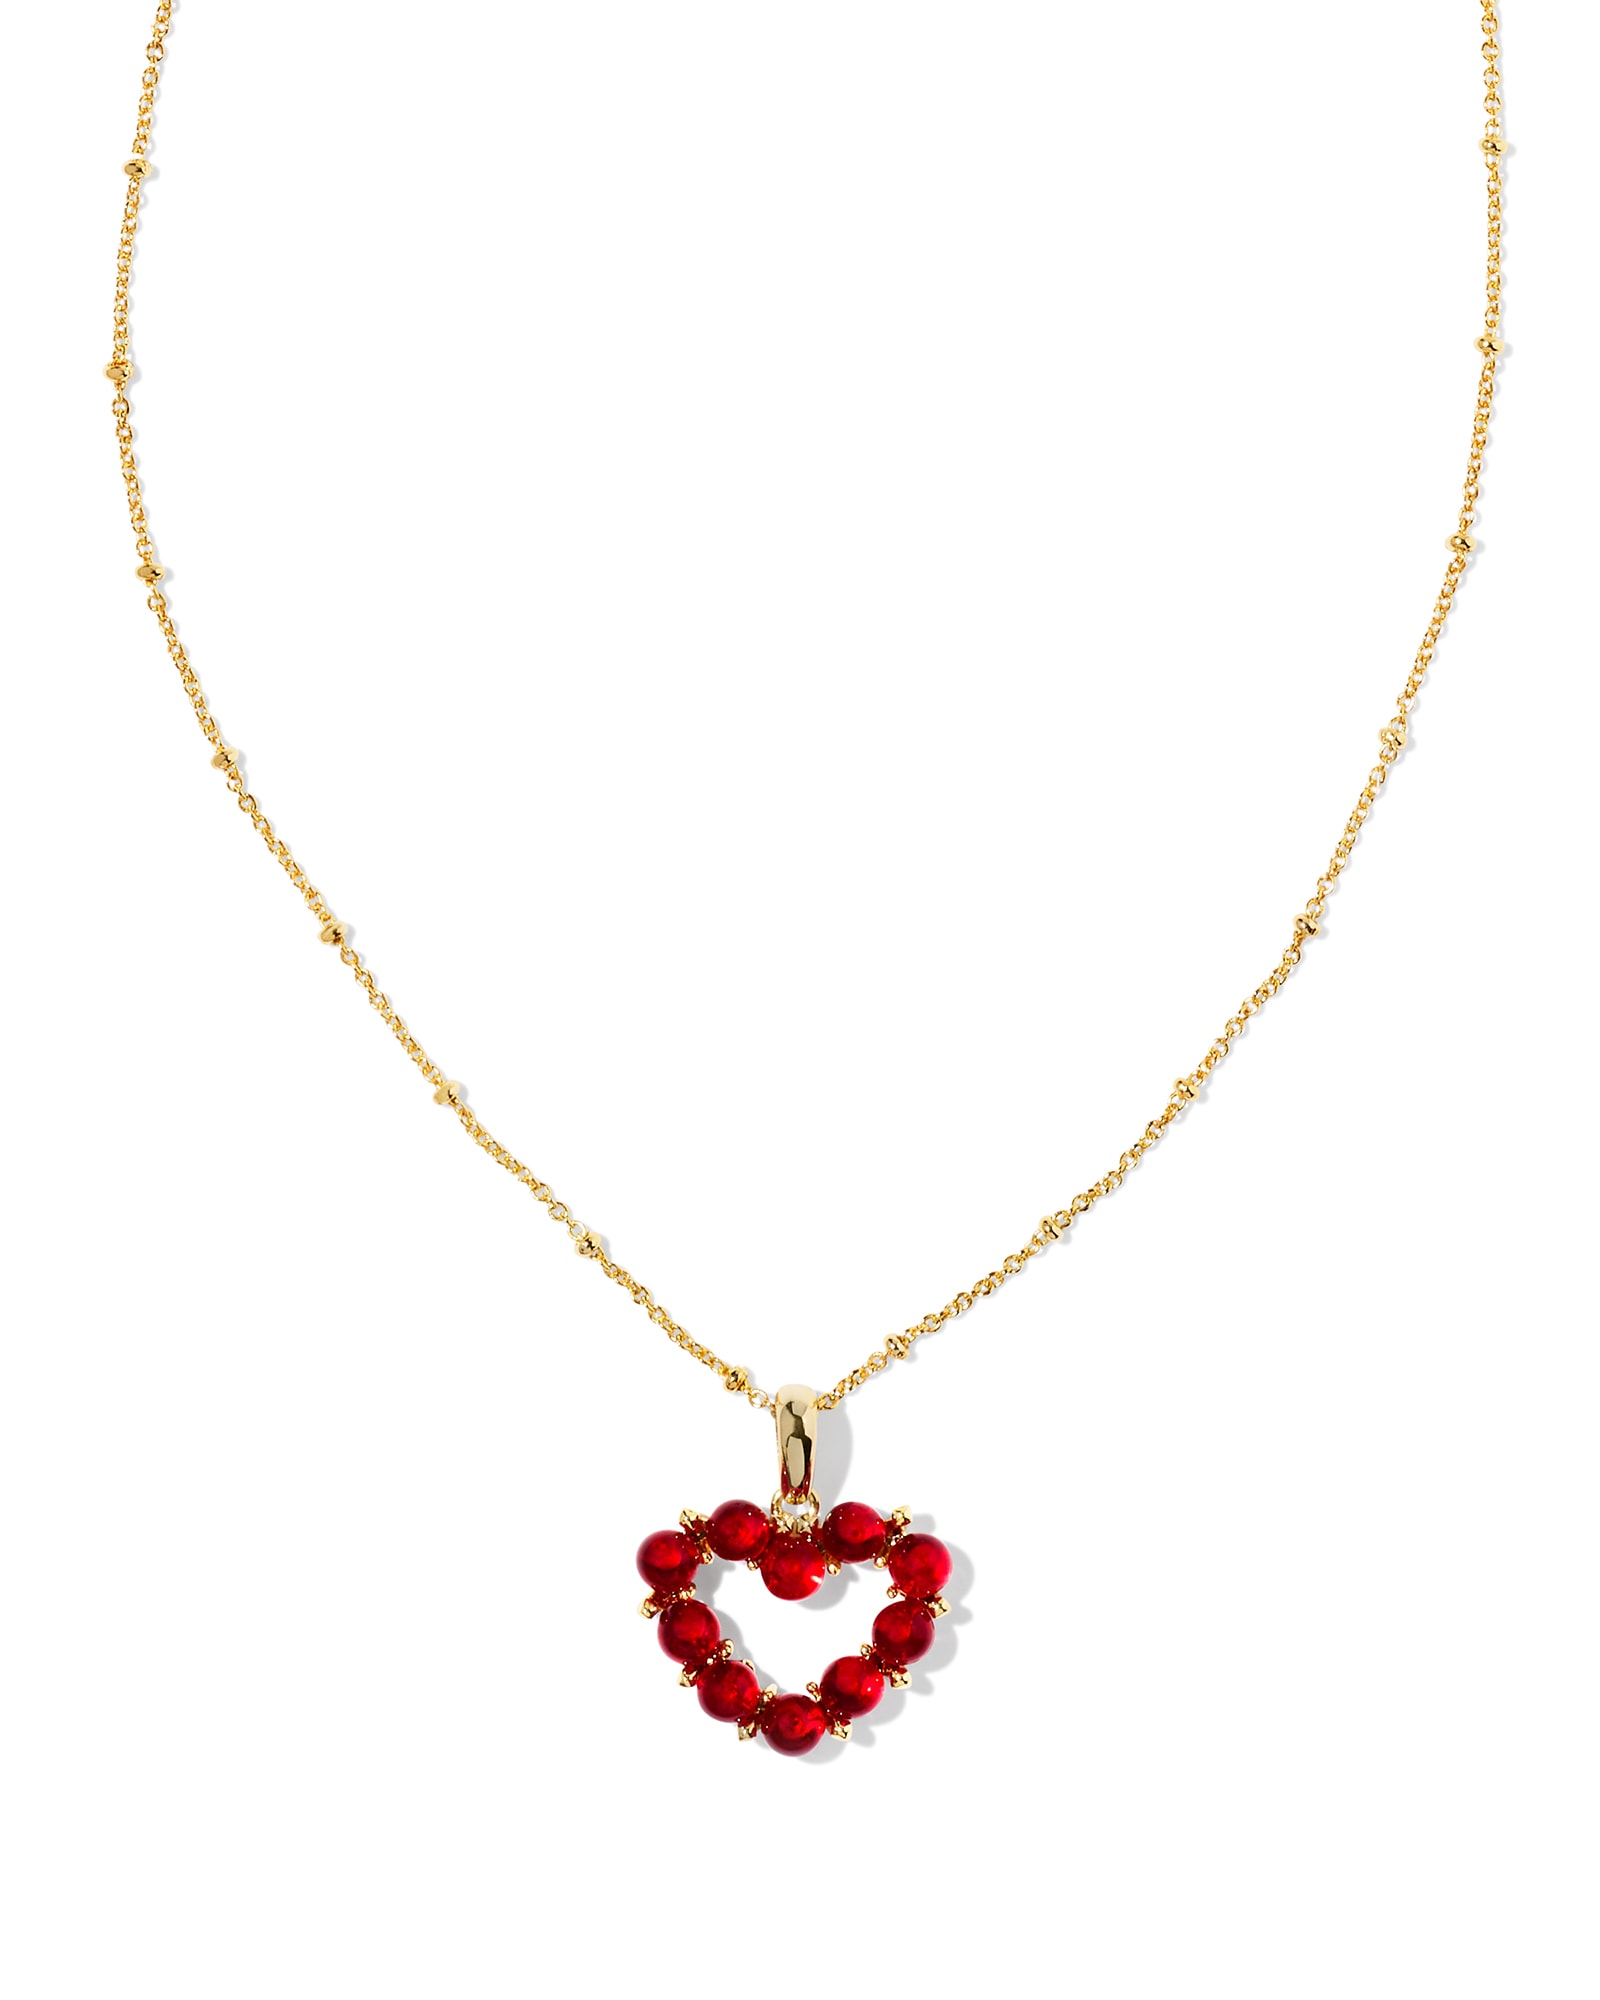 Ashton Gold Heart Short Pendant Necklace in Red Glass